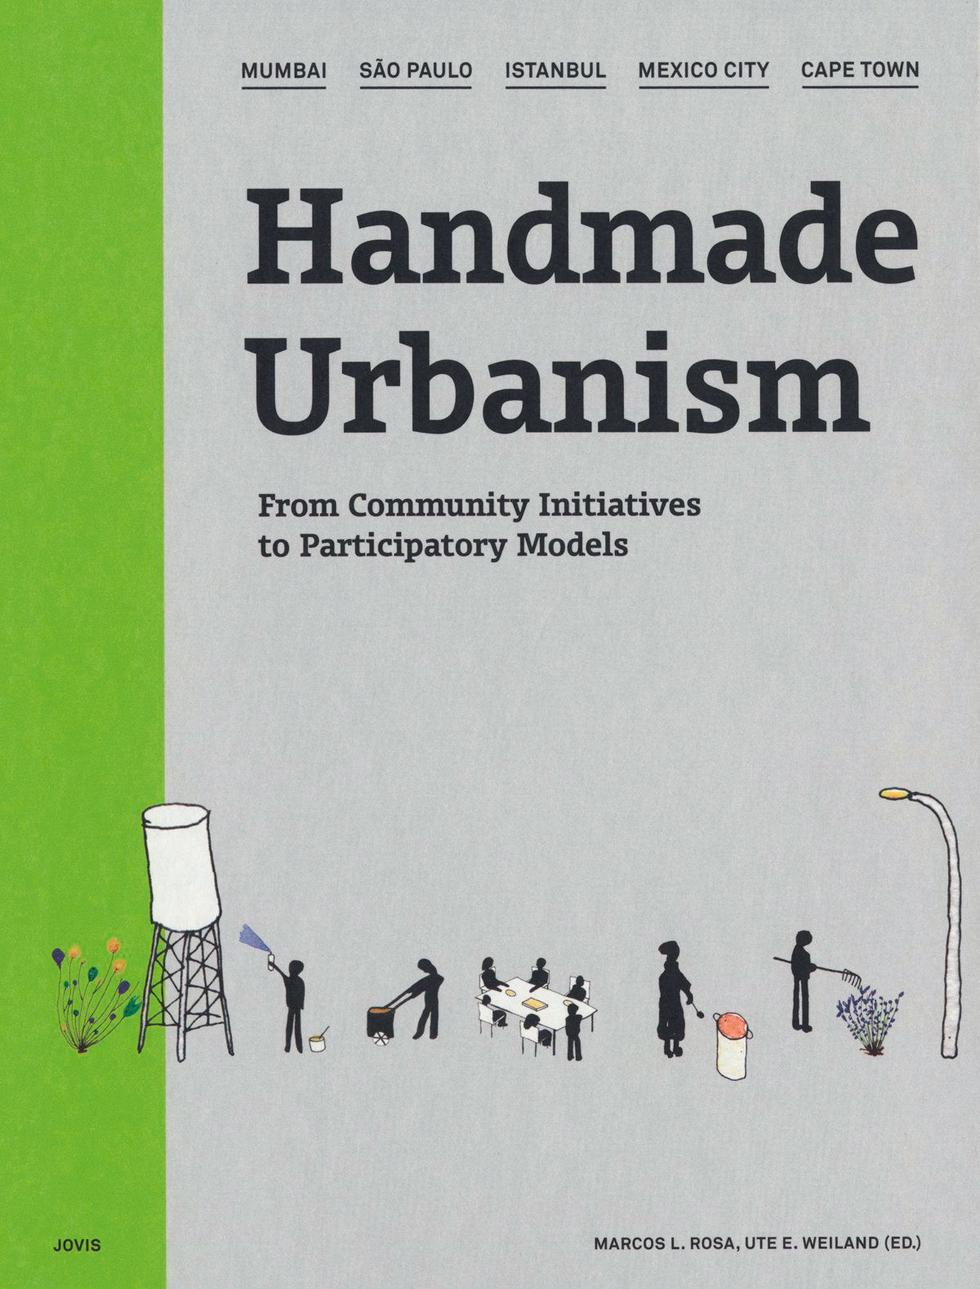 Handmade urbanism